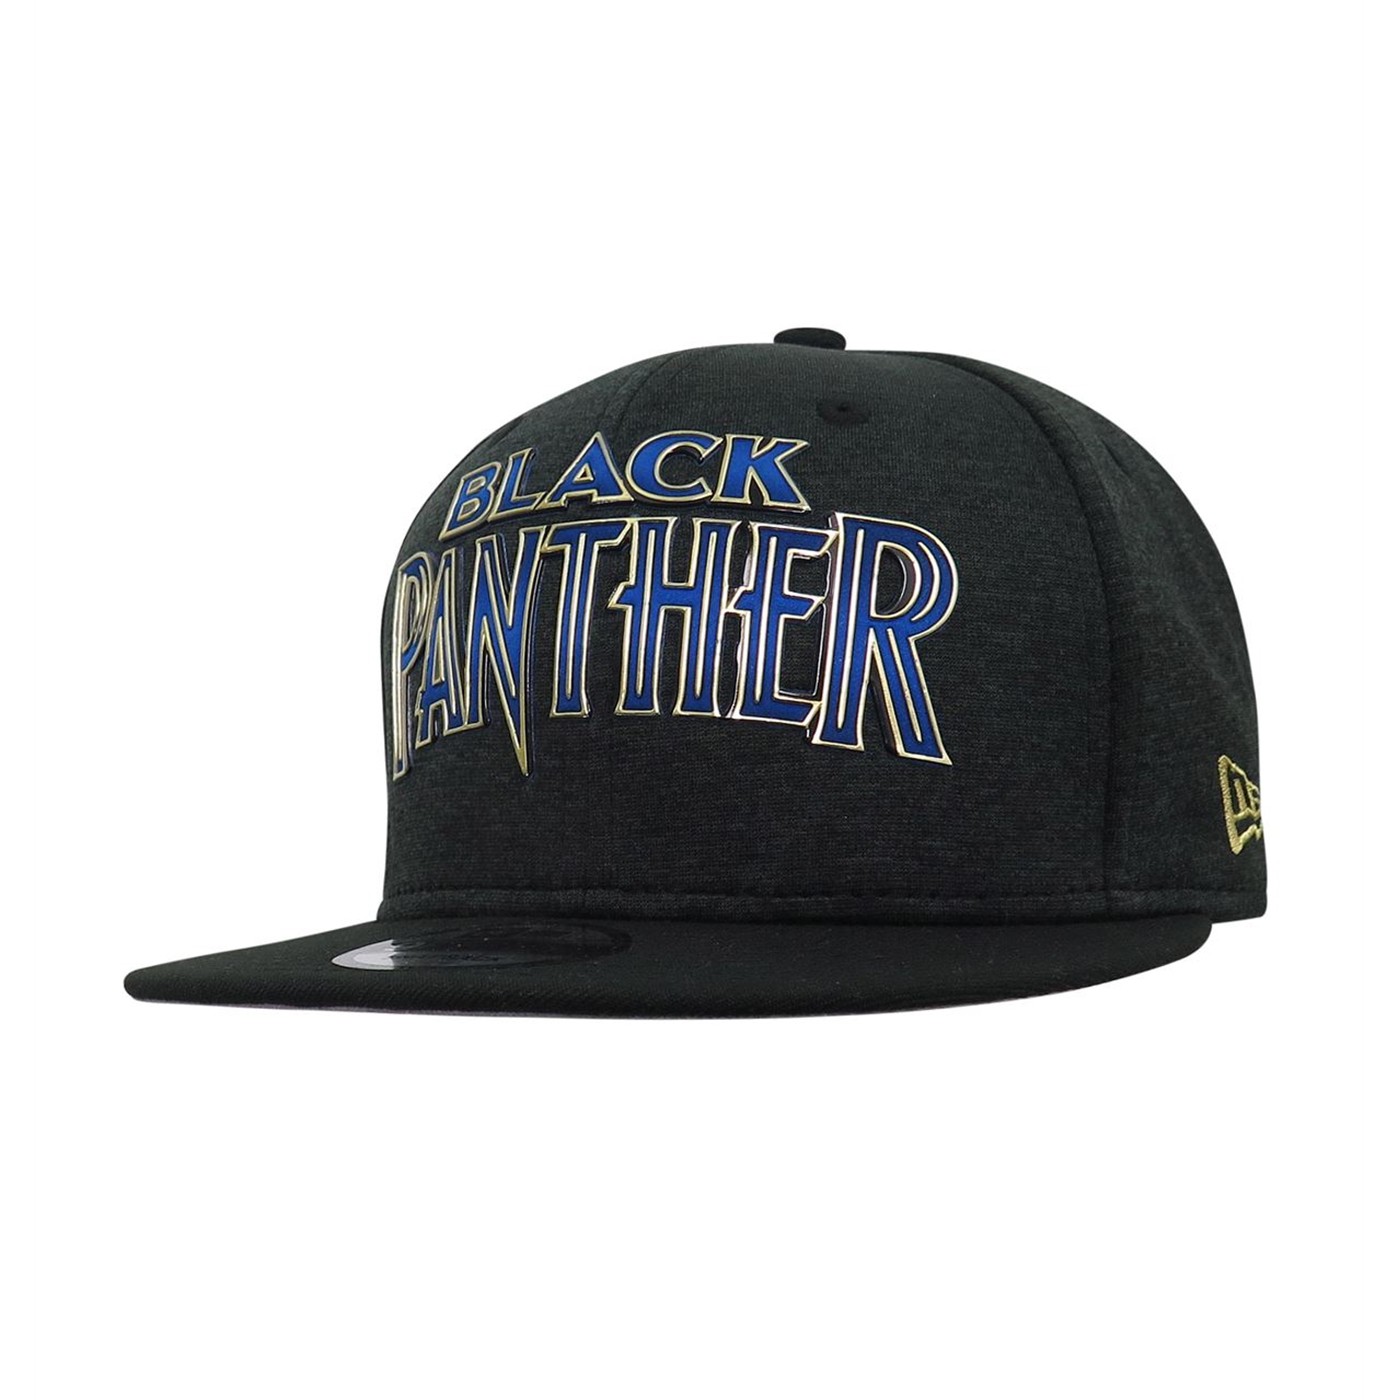 Black Panther Movie Logo 9Fifty Adjustable Hat